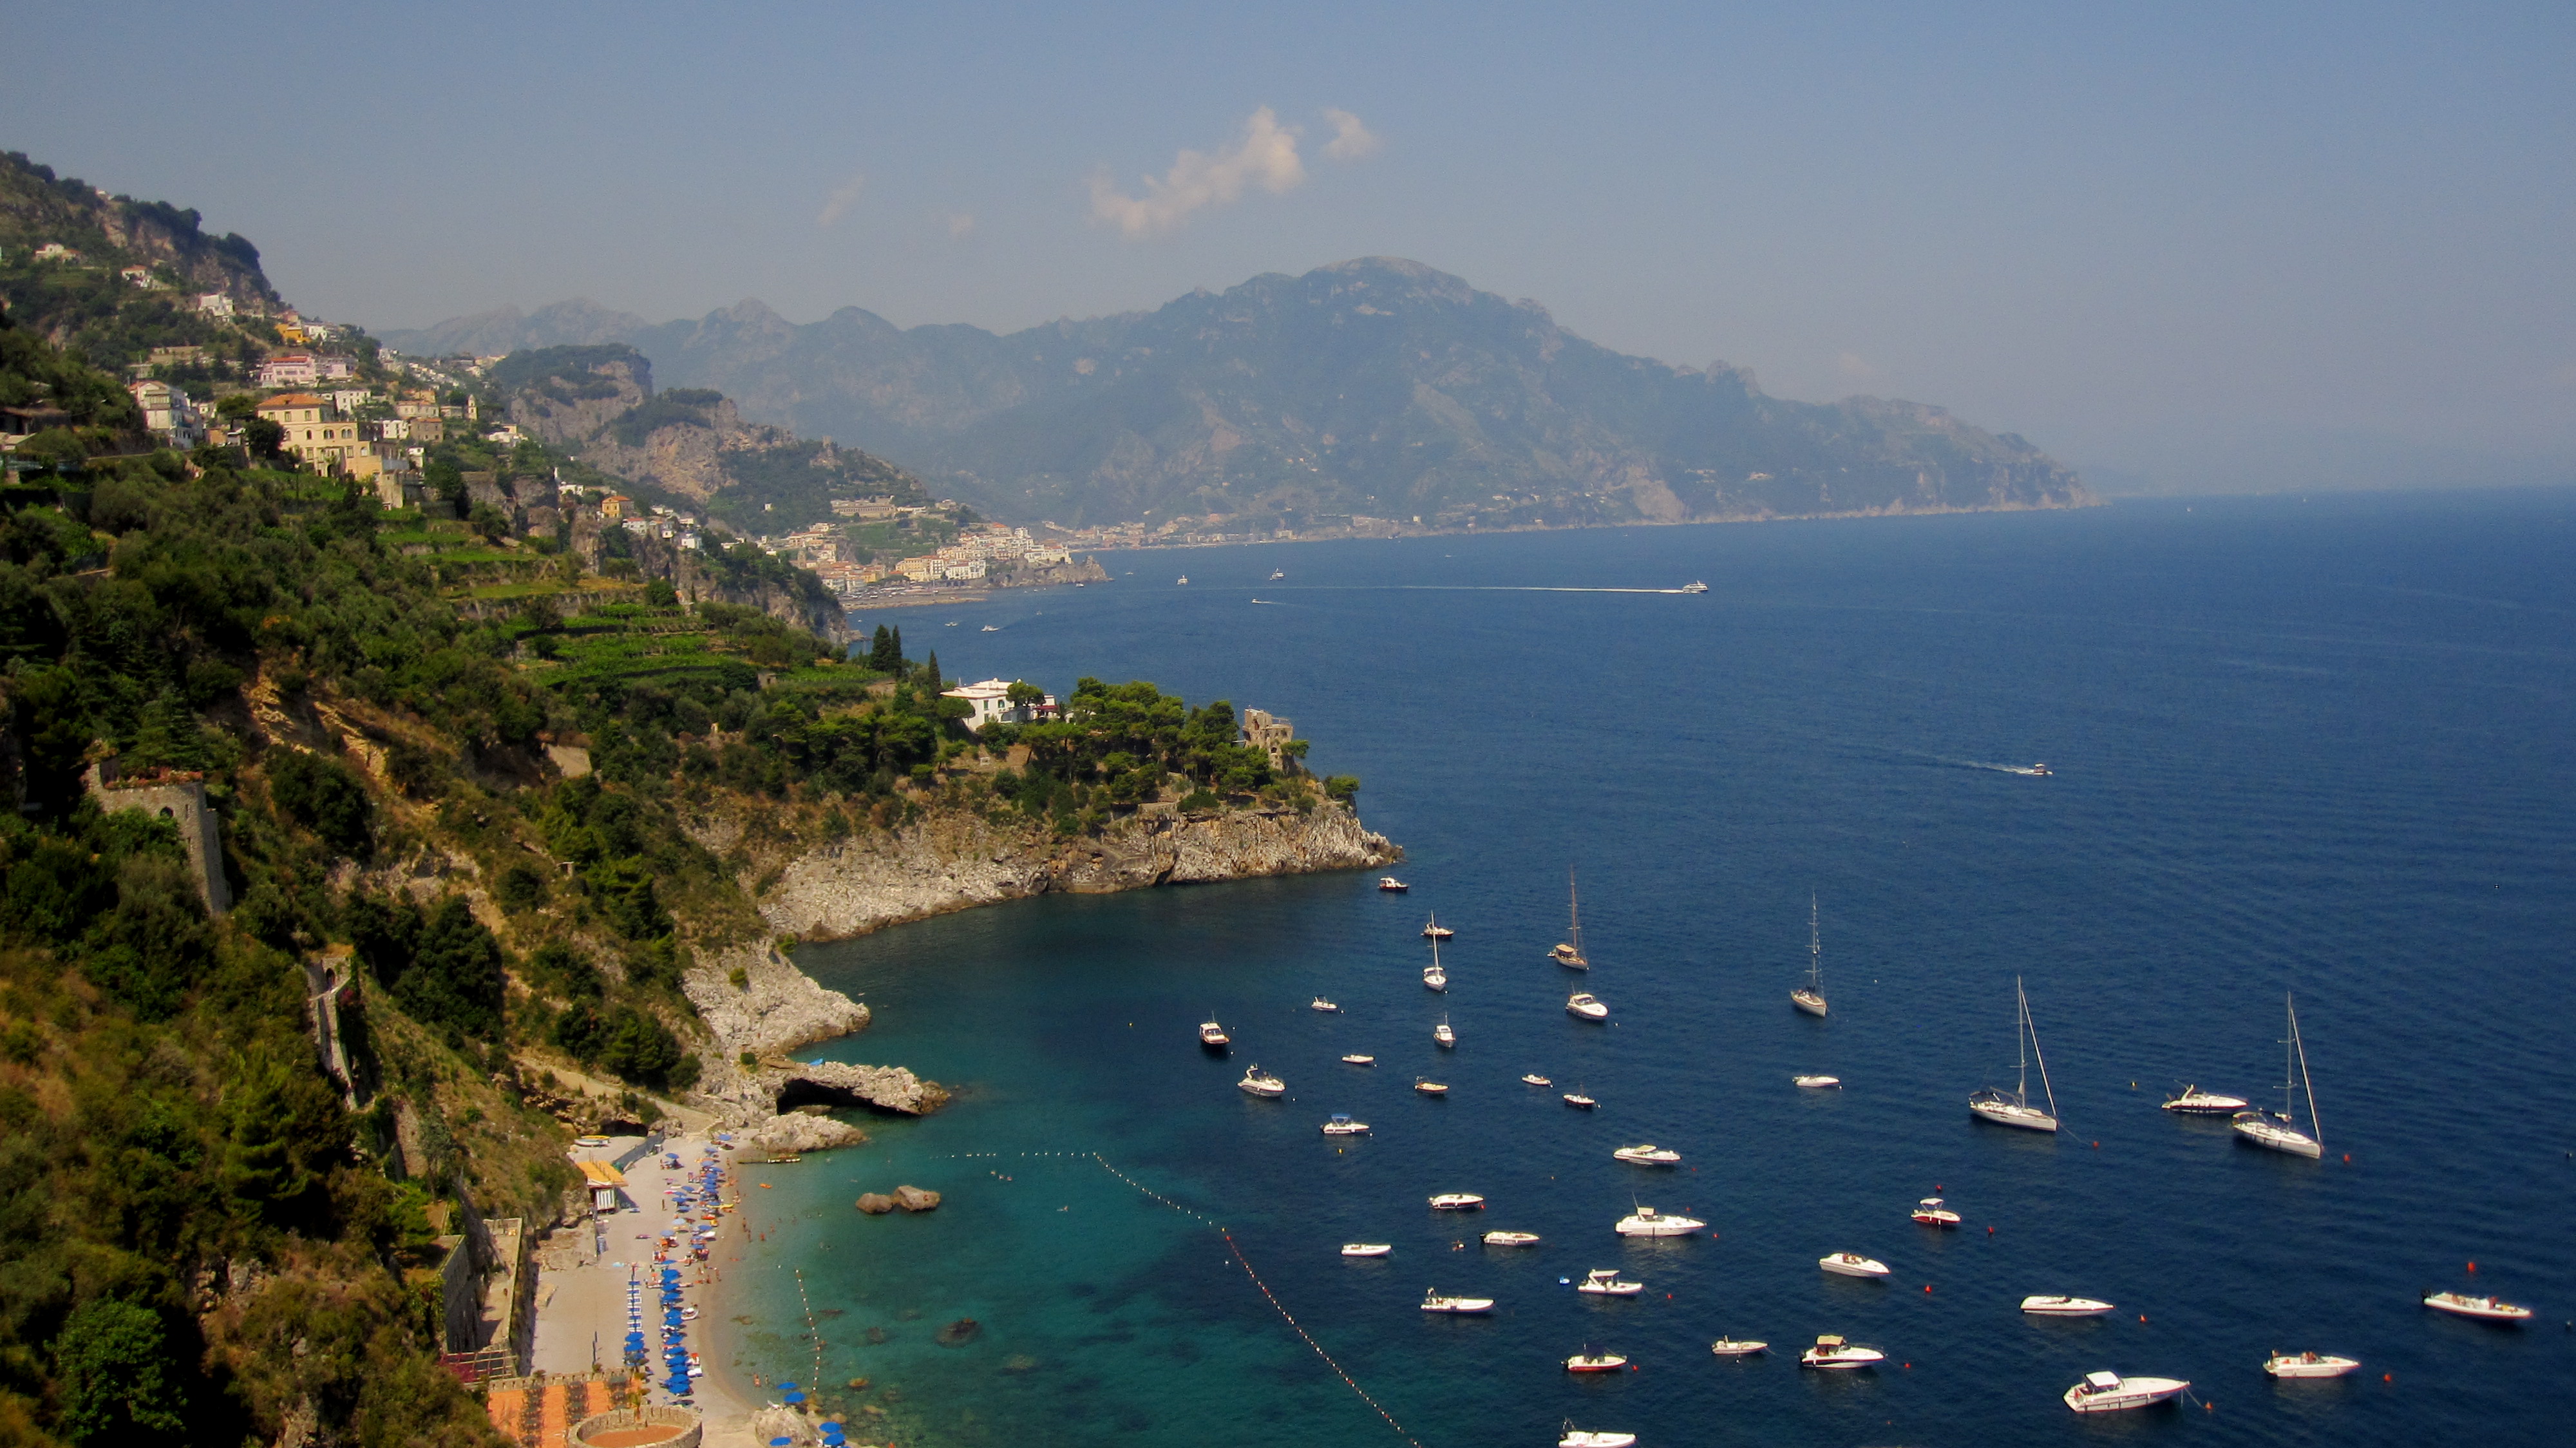 Amalfi, Amalfi coast, bus ride amalfi coast, how to get to amalfi